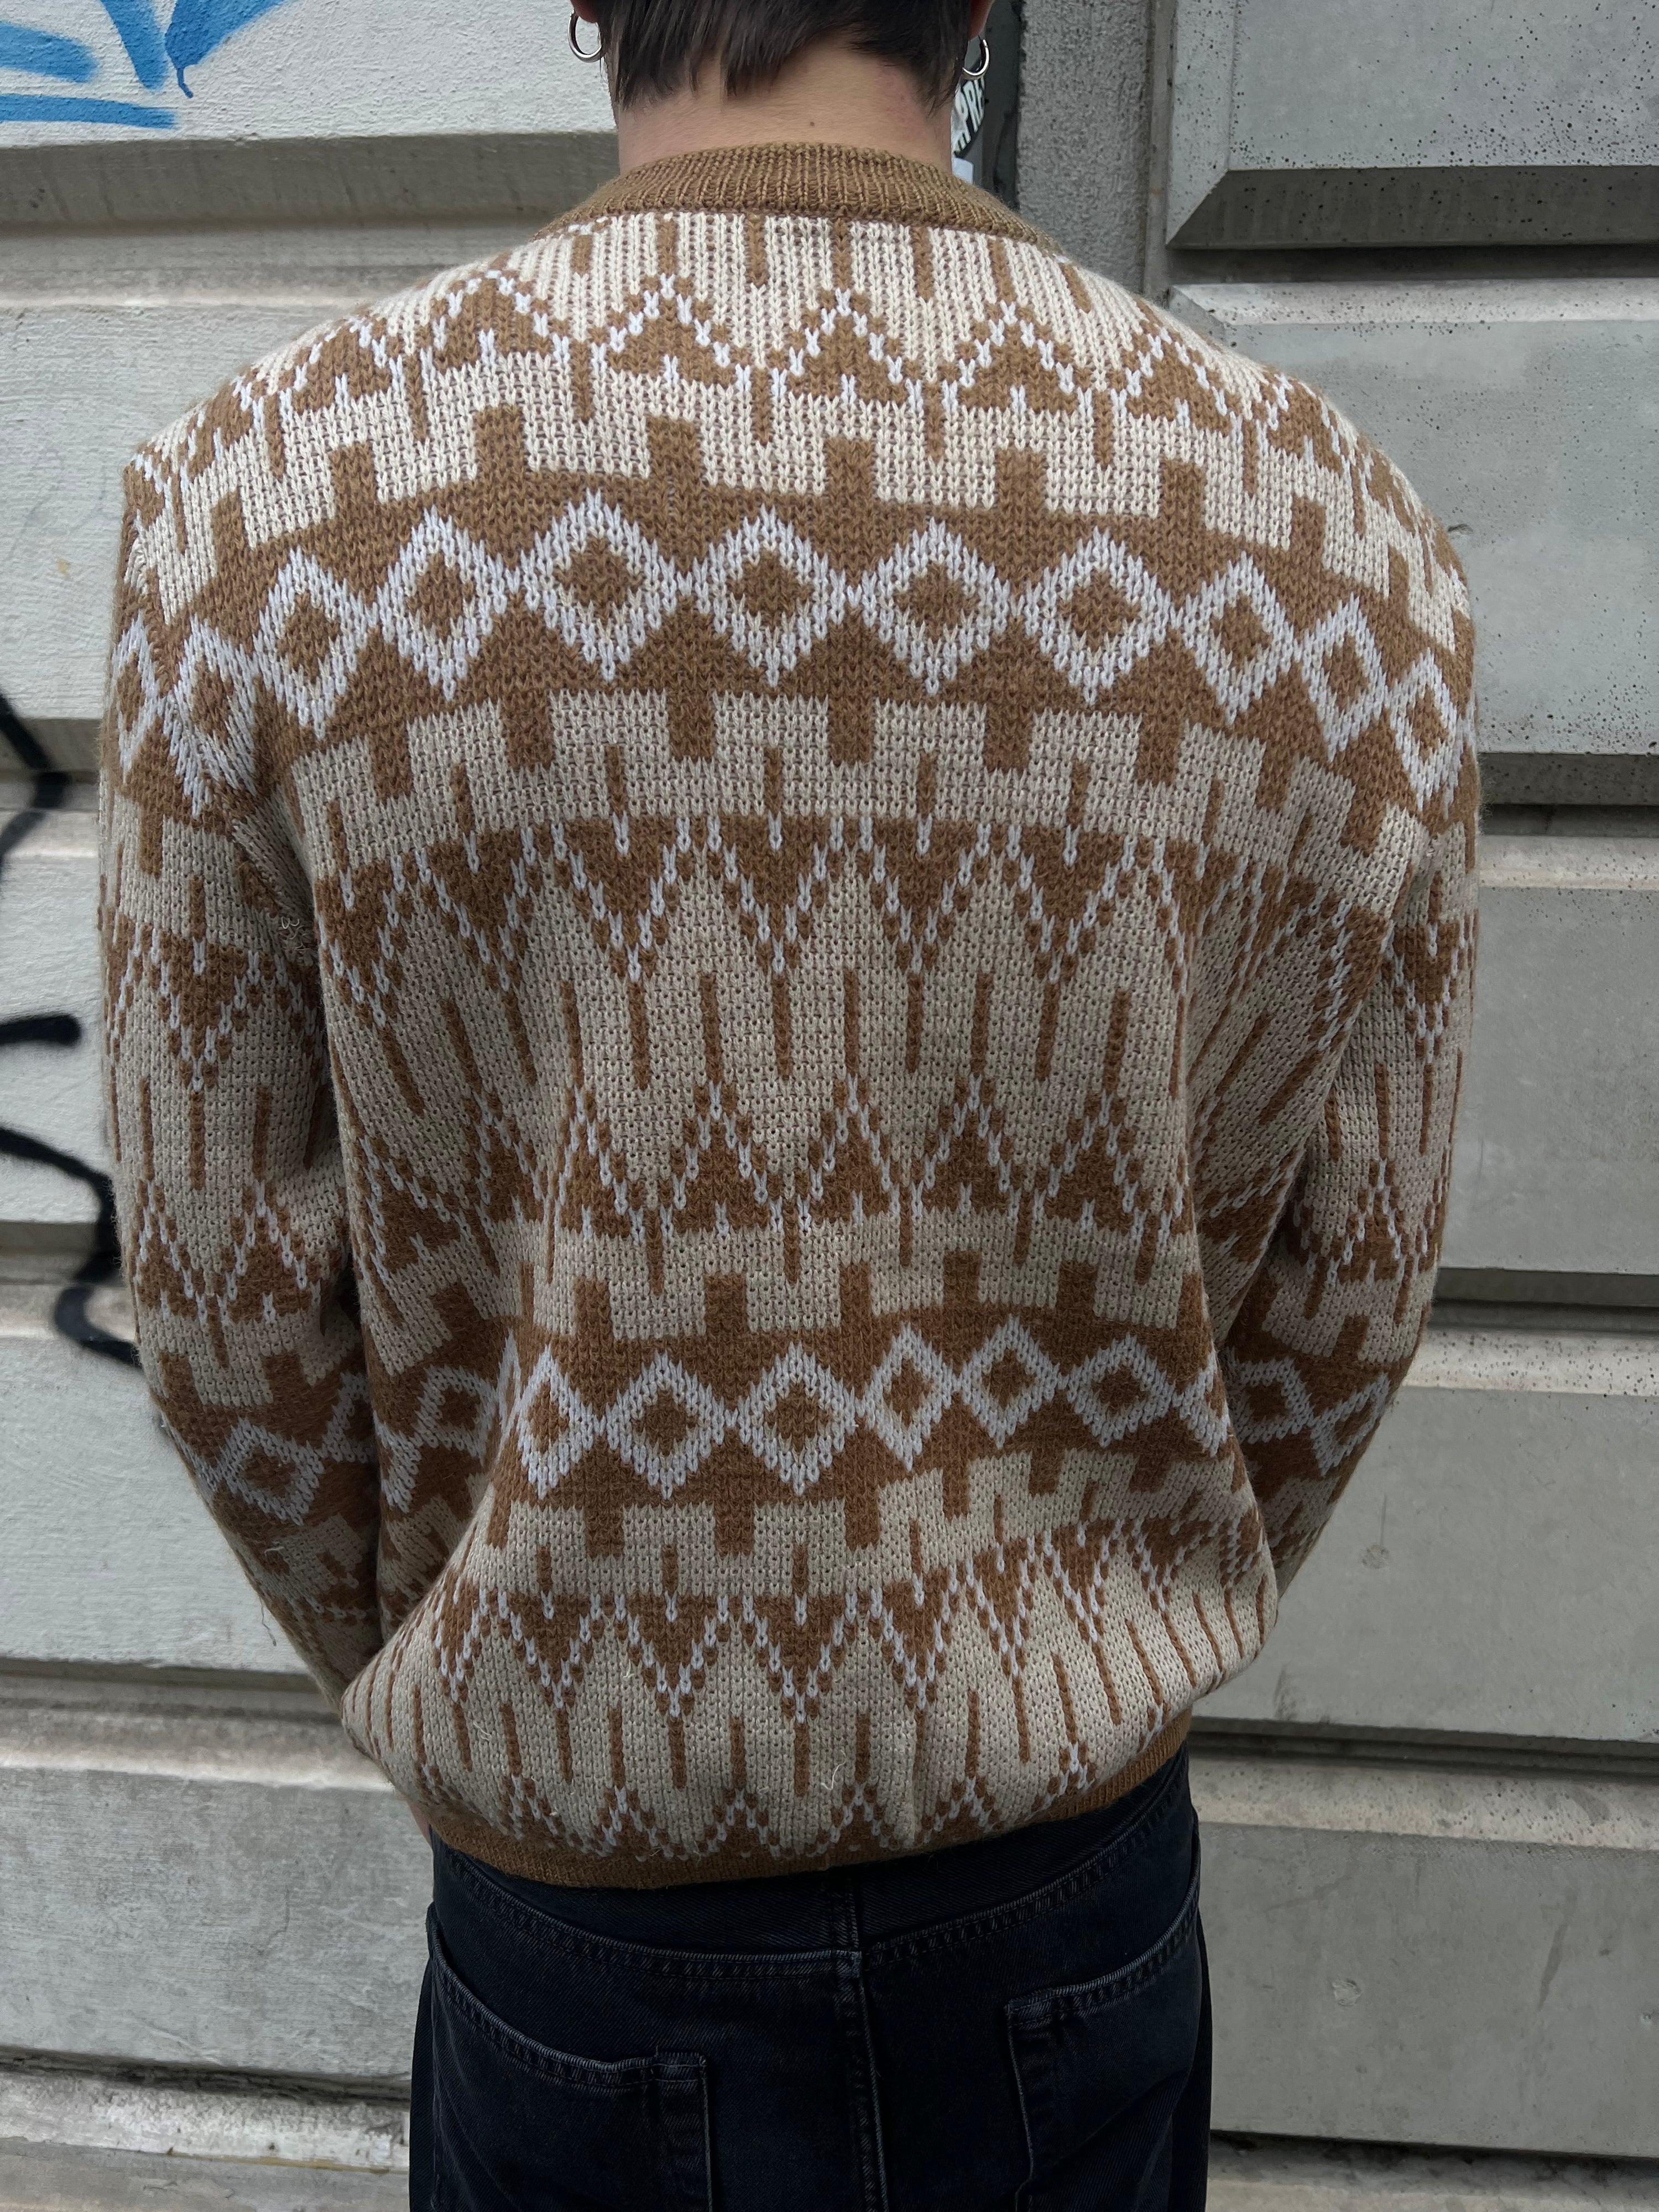 Vintage 70s 80s Wool Knit Sweater (M)